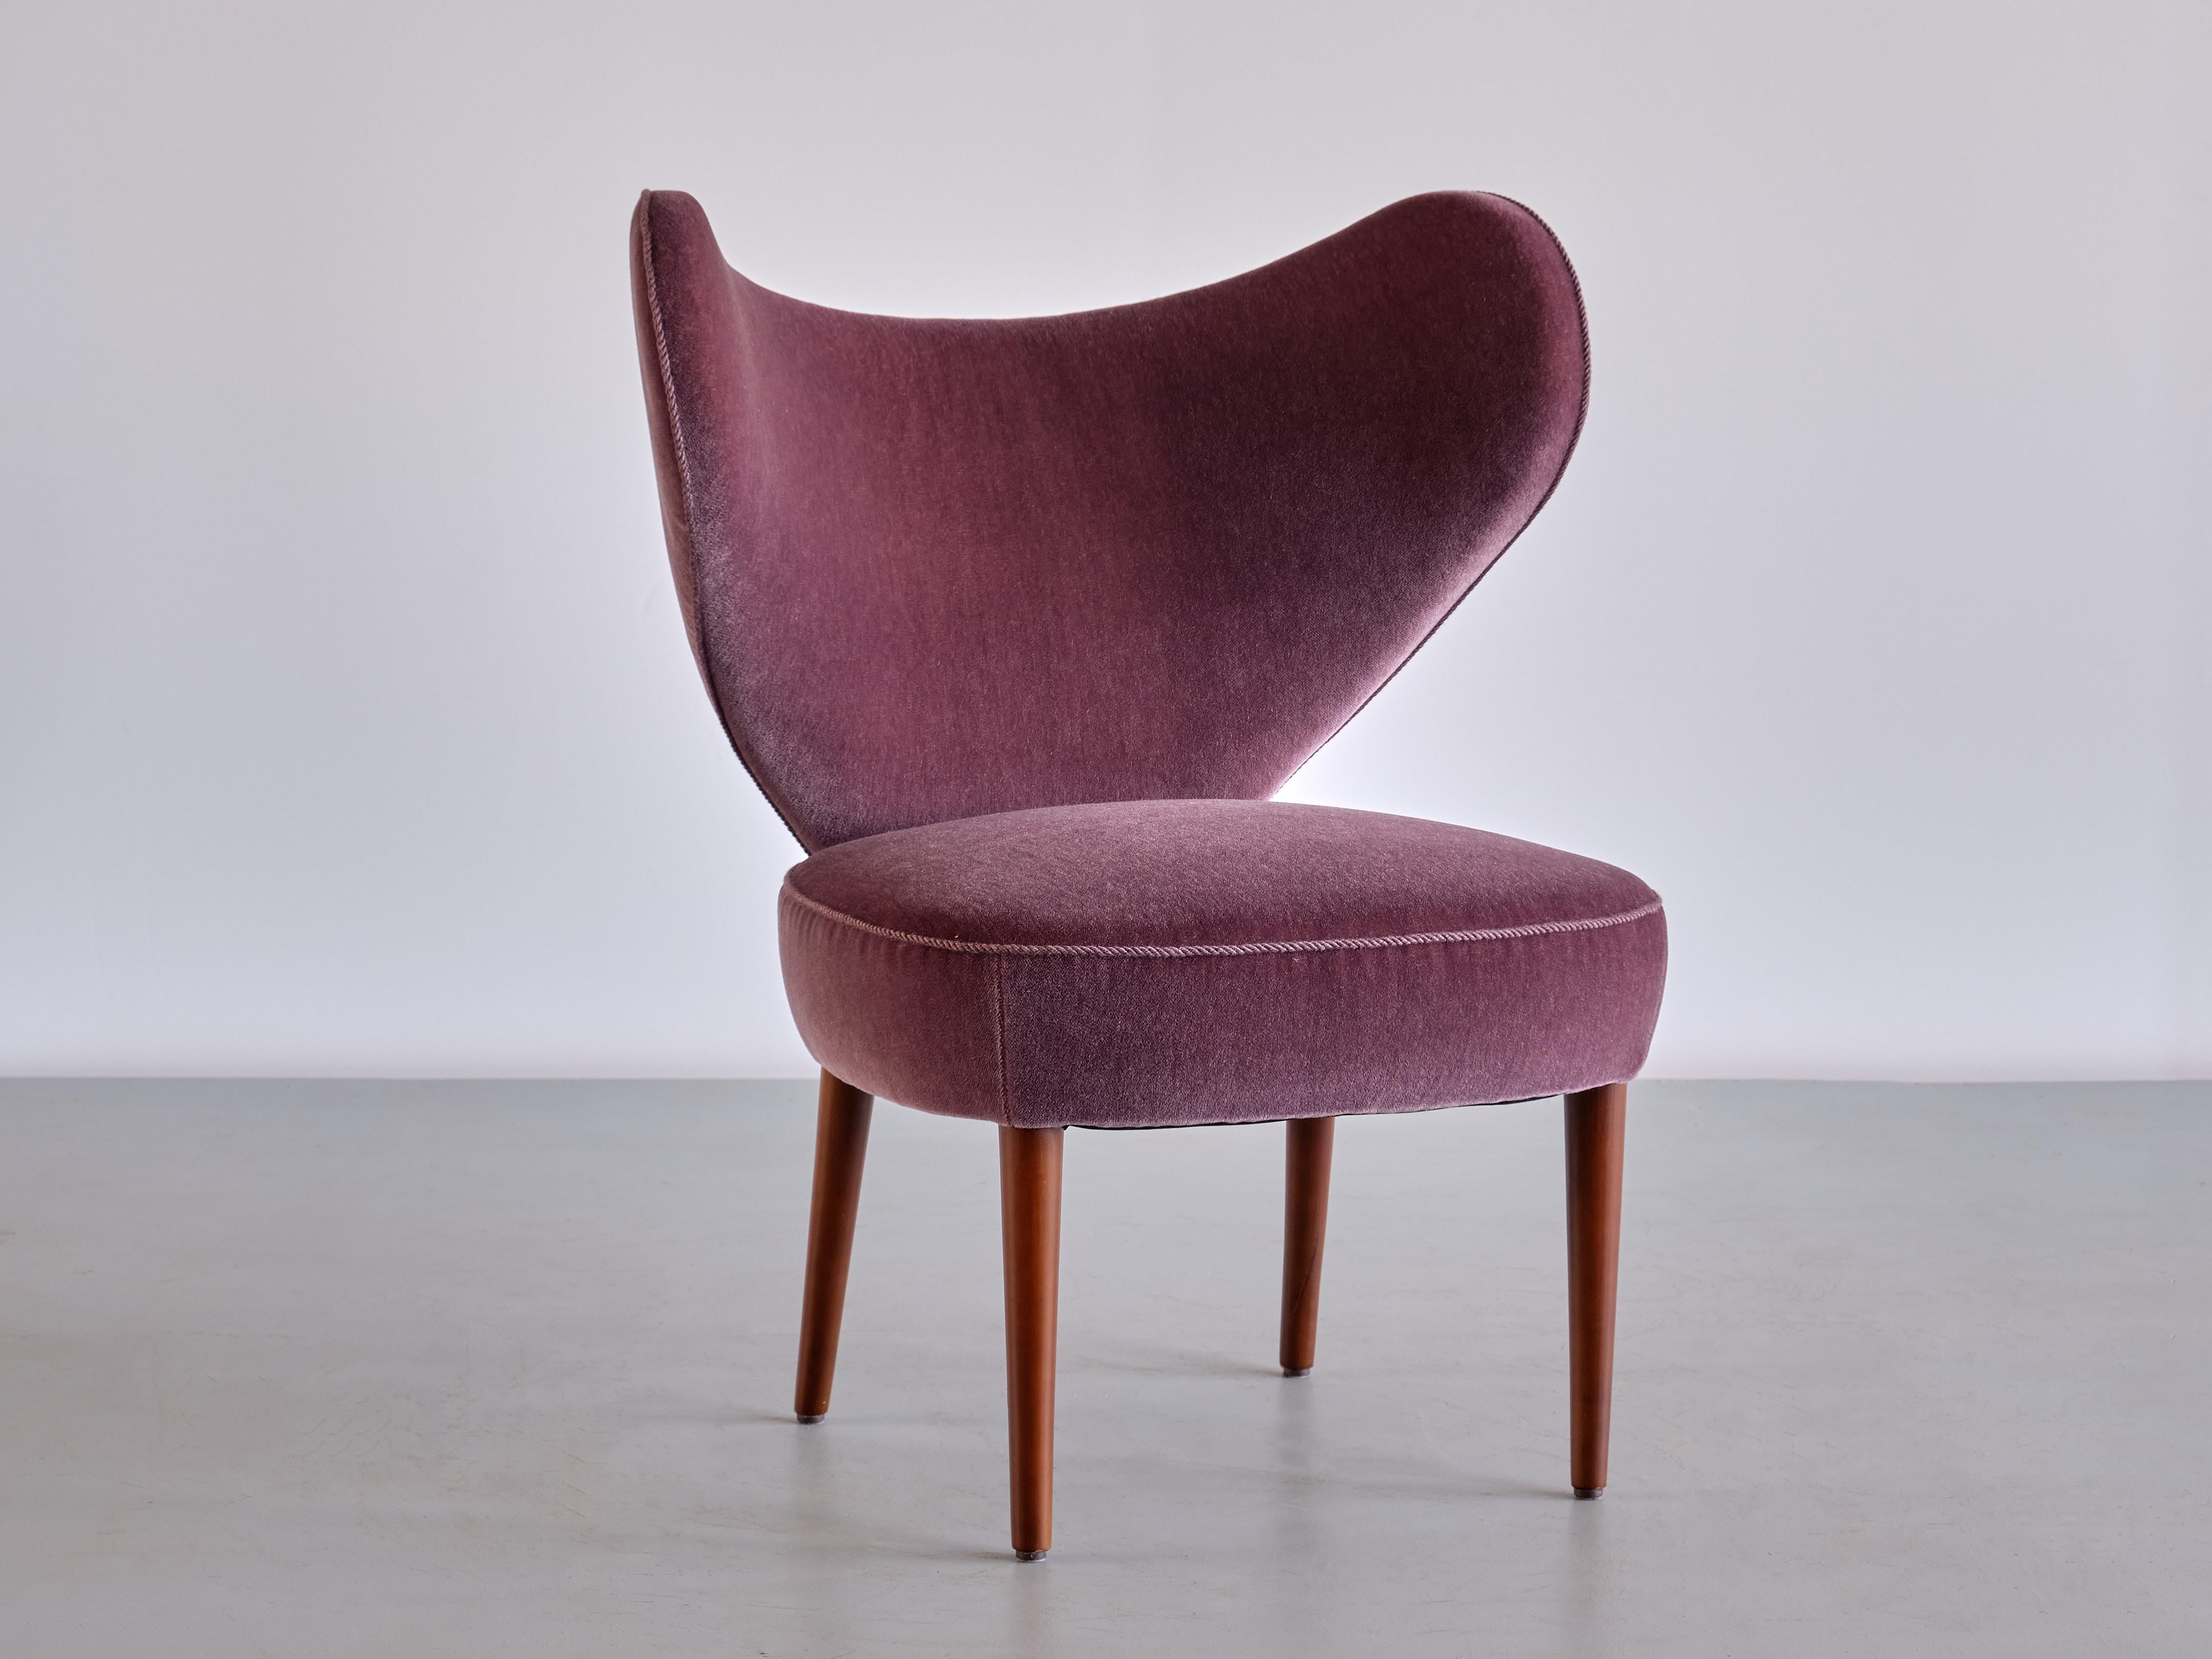 Exceptional 'Heart' Chair in Purple Mohair, Brøndbyøster Møbel, Denmark, 1953 For Sale 11